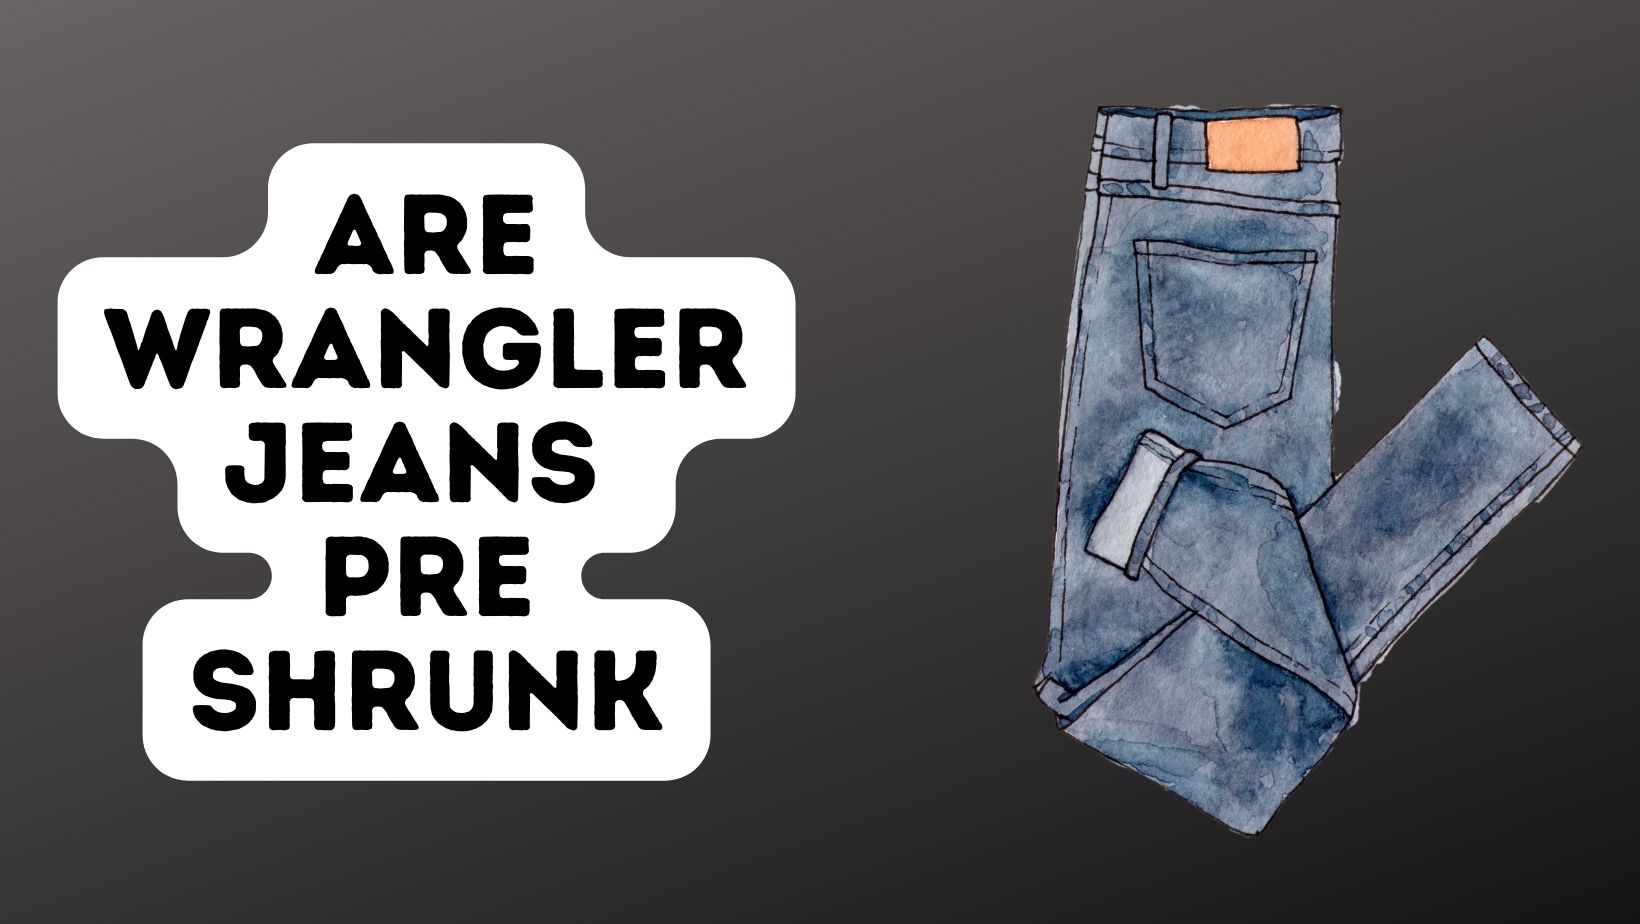 Are Wrangler Jeans Preshrunk?